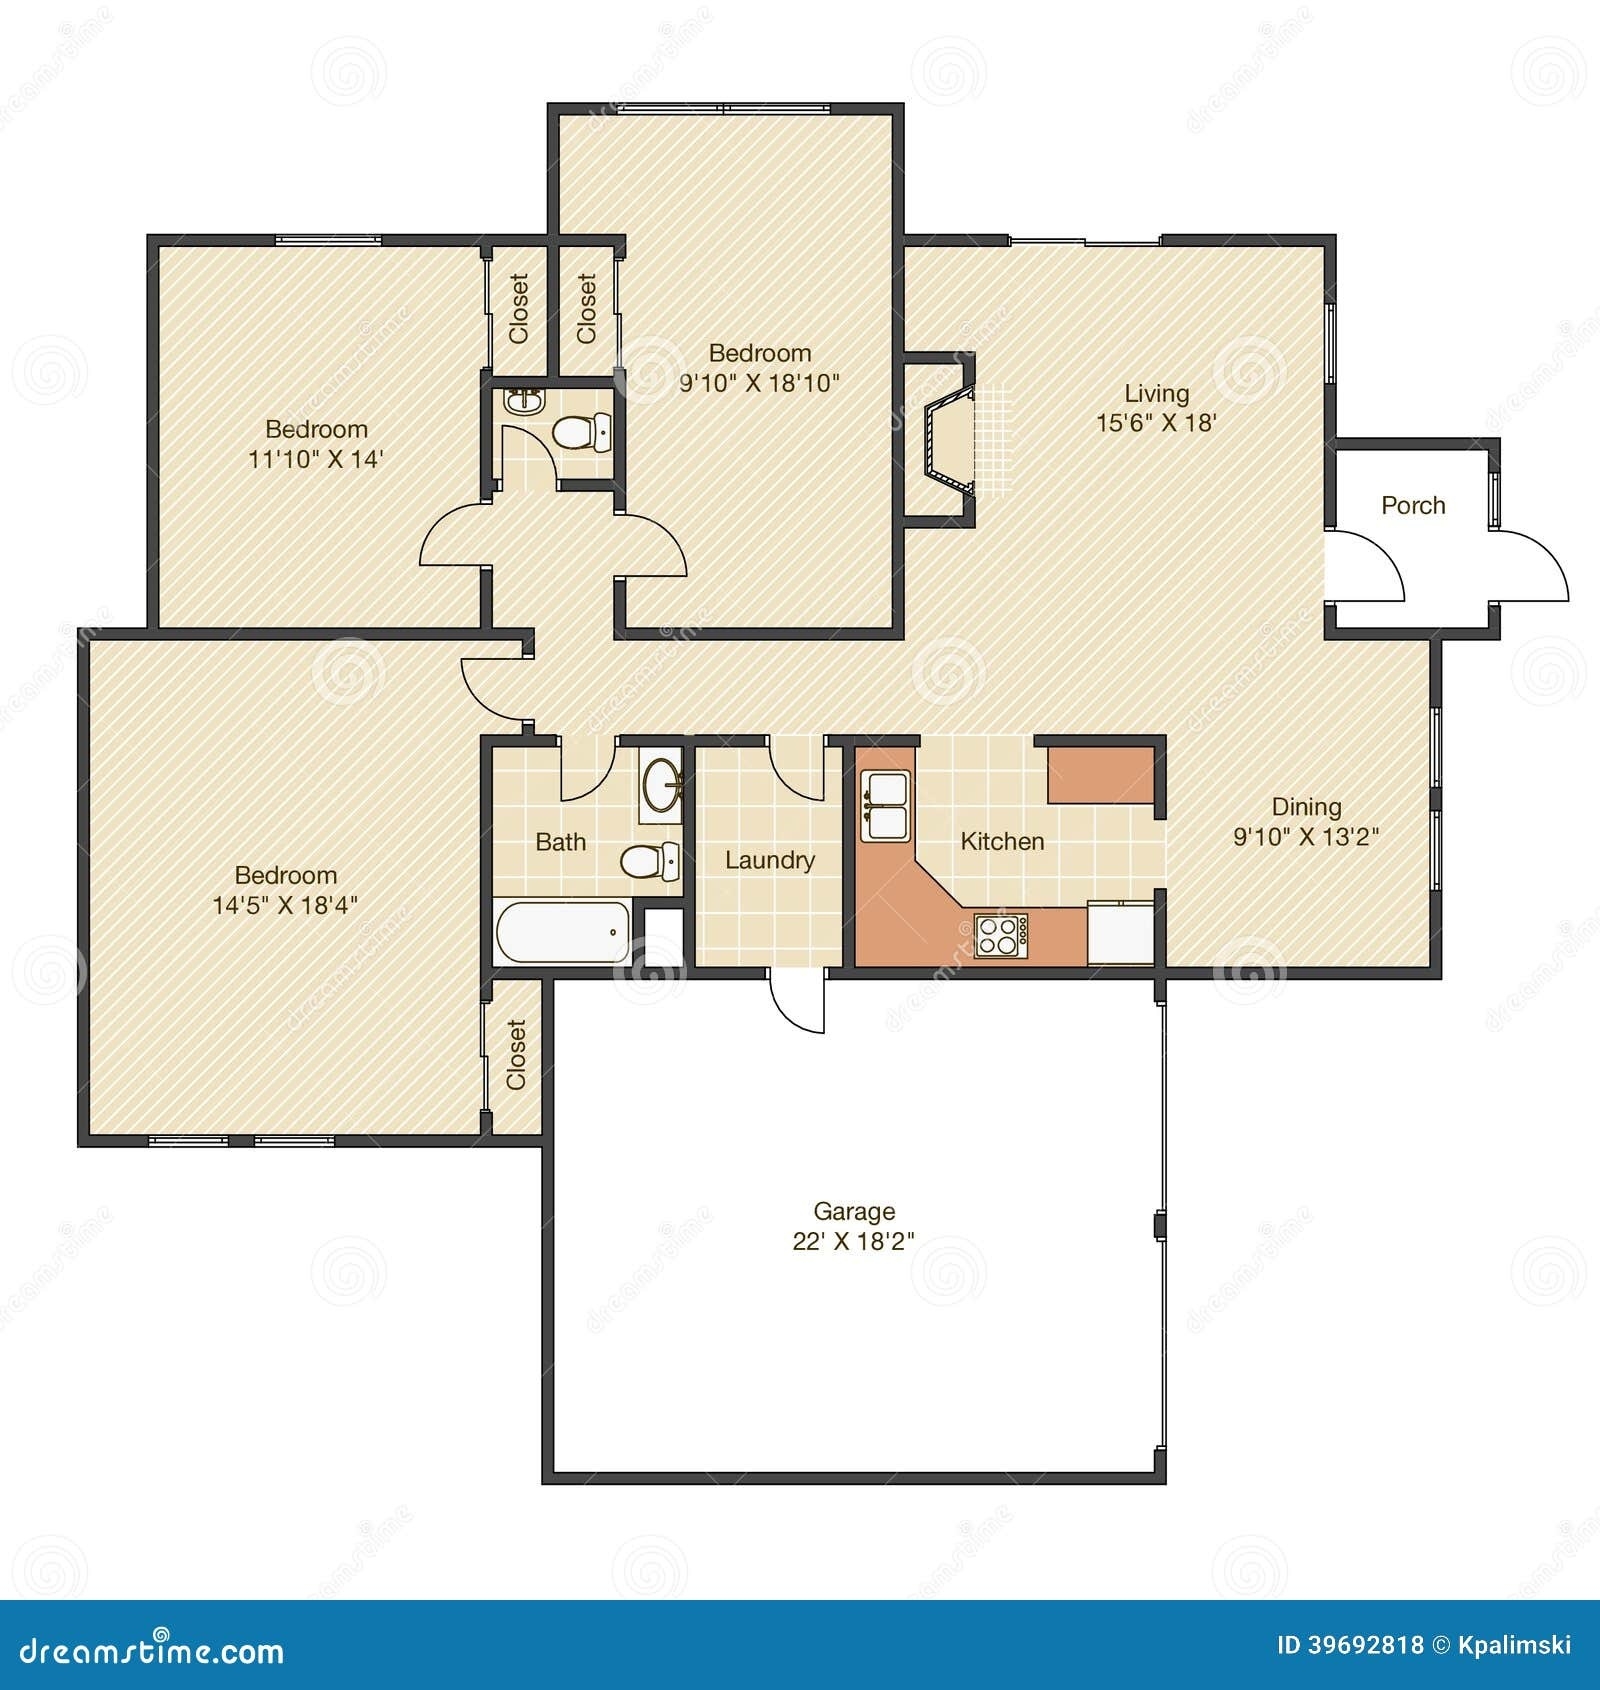 Splendid house floor plans measurements simple house floor plan measurements regarding sample house plans with measurements